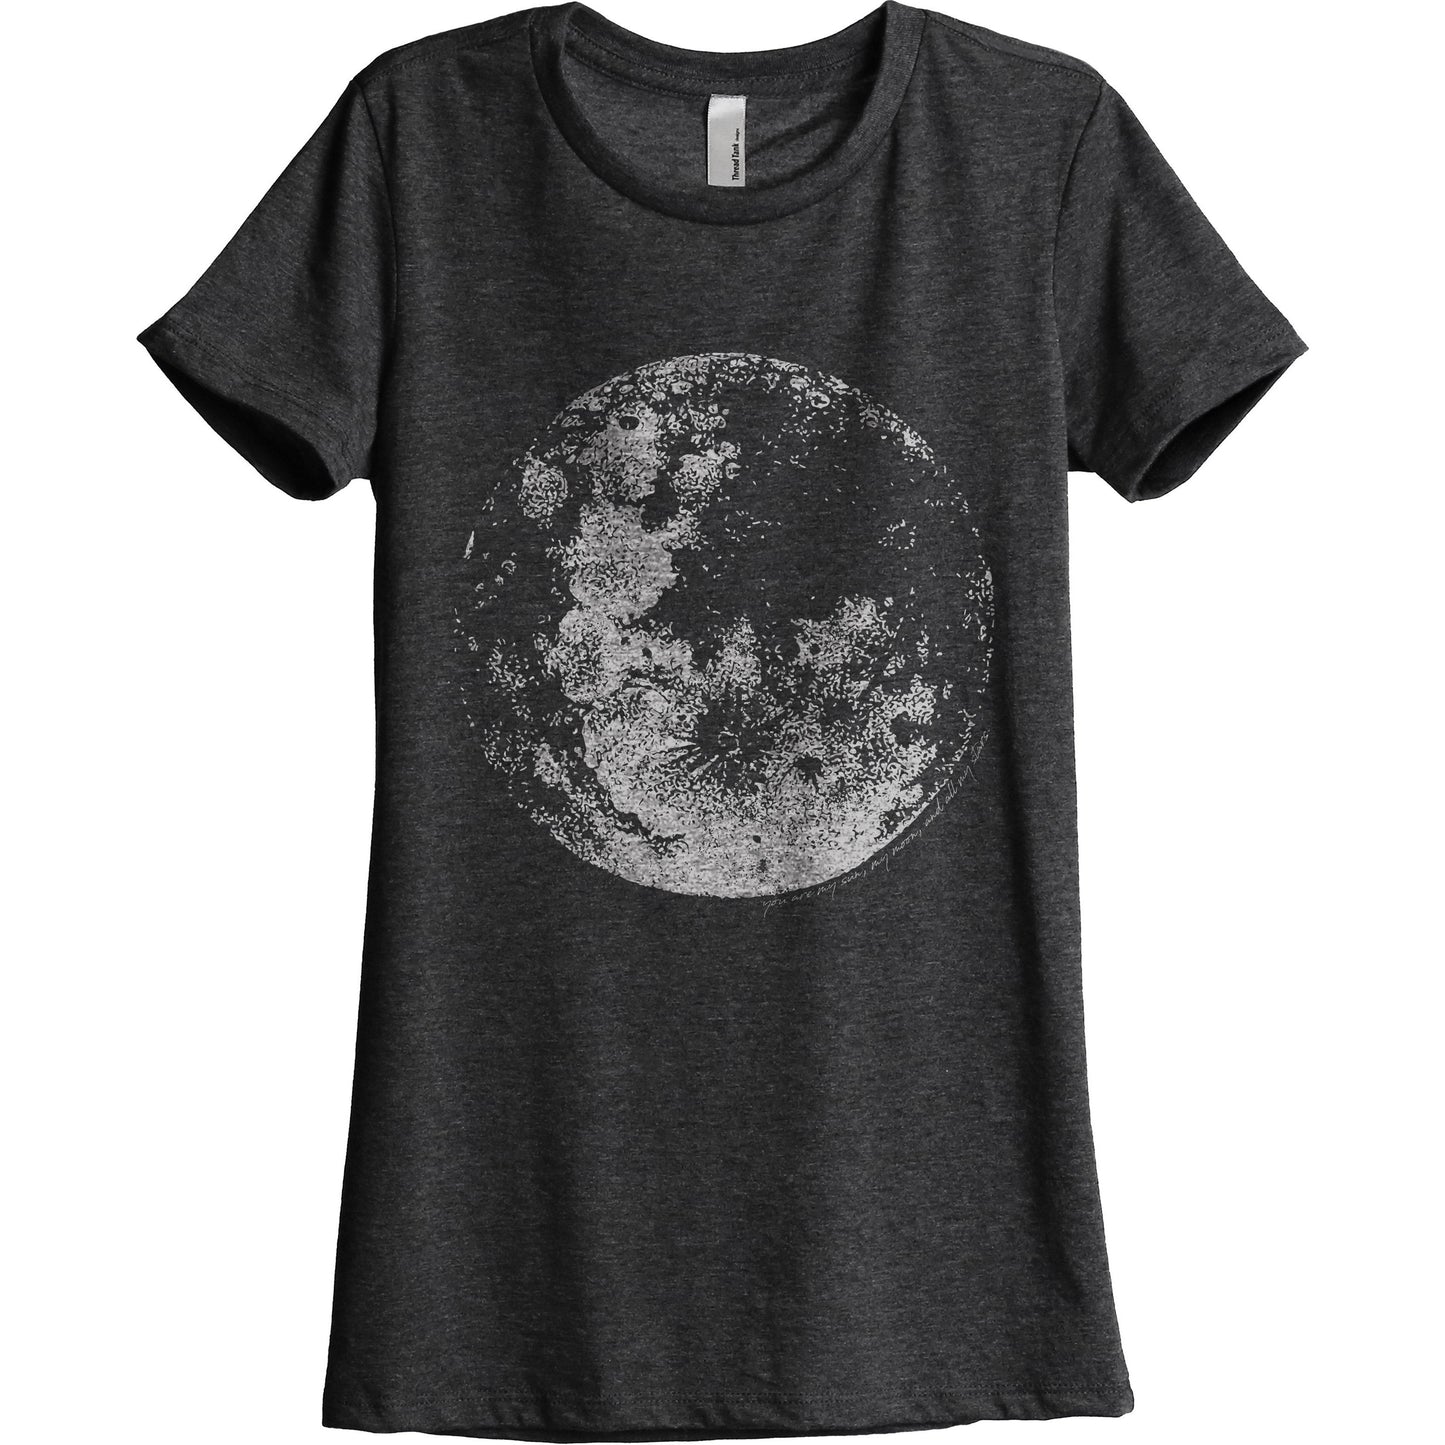 Full Moon Women's Relaxed Crewneck T-Shirt Top Tee Charcoal Grey
